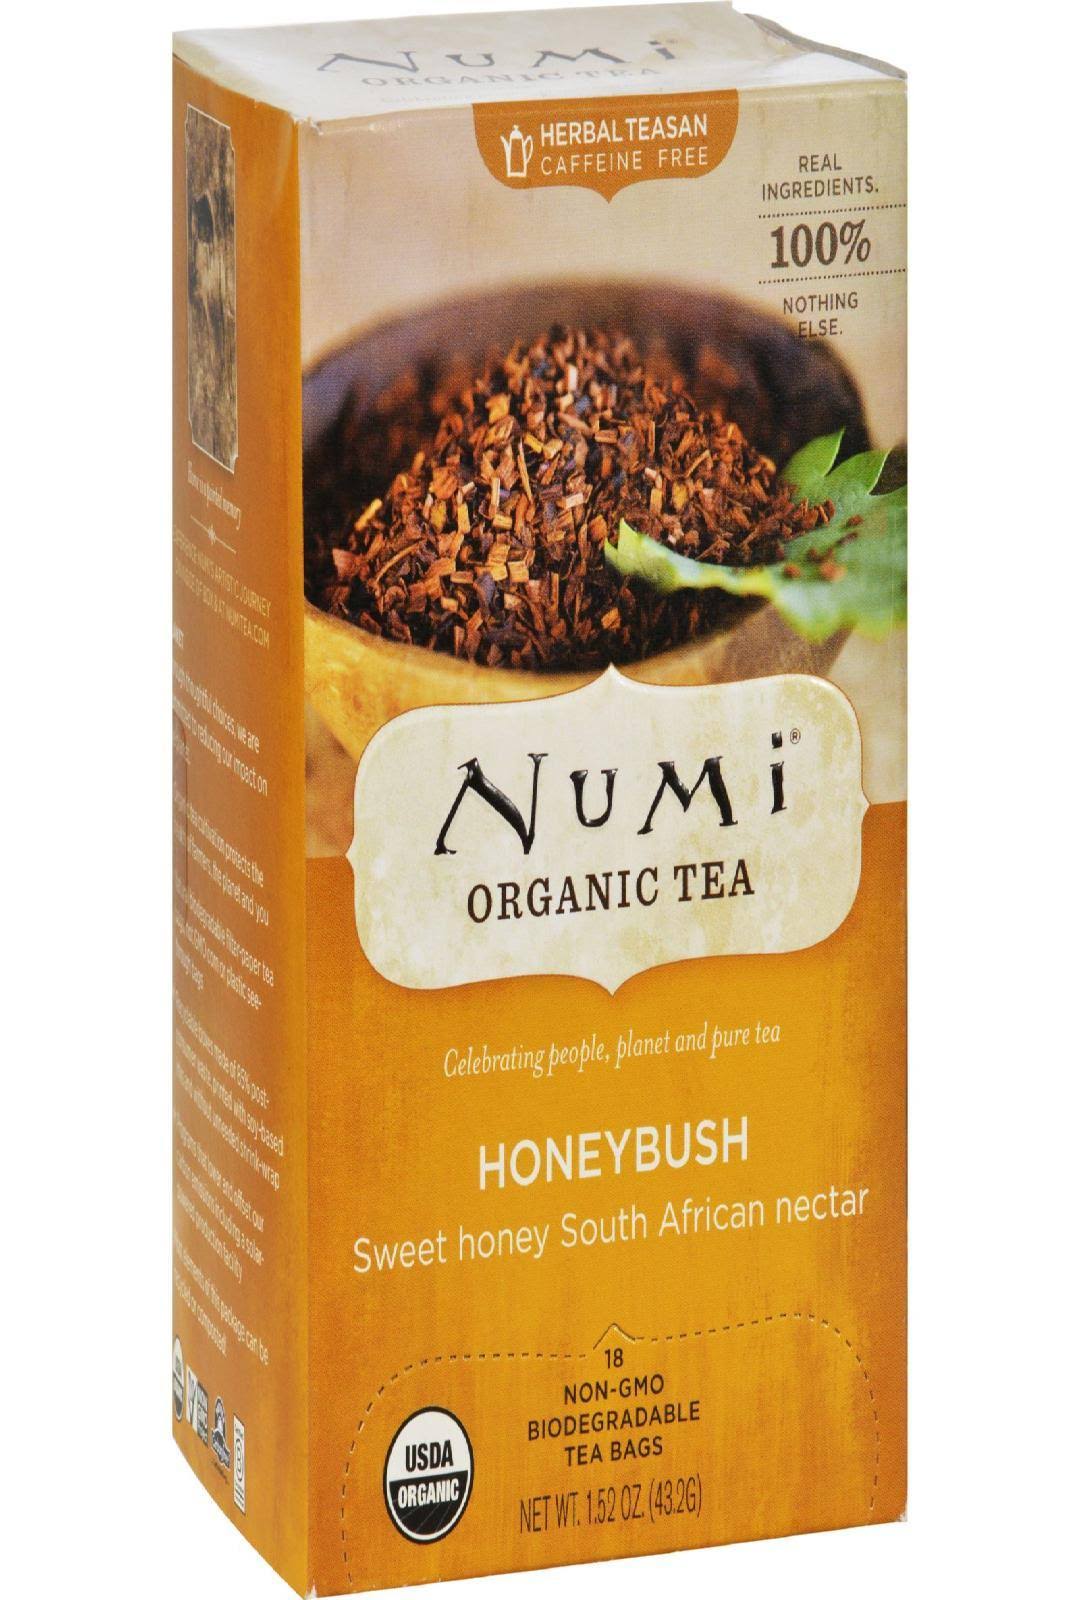 Numi Organic Tea - Honeybush, 18 Bags